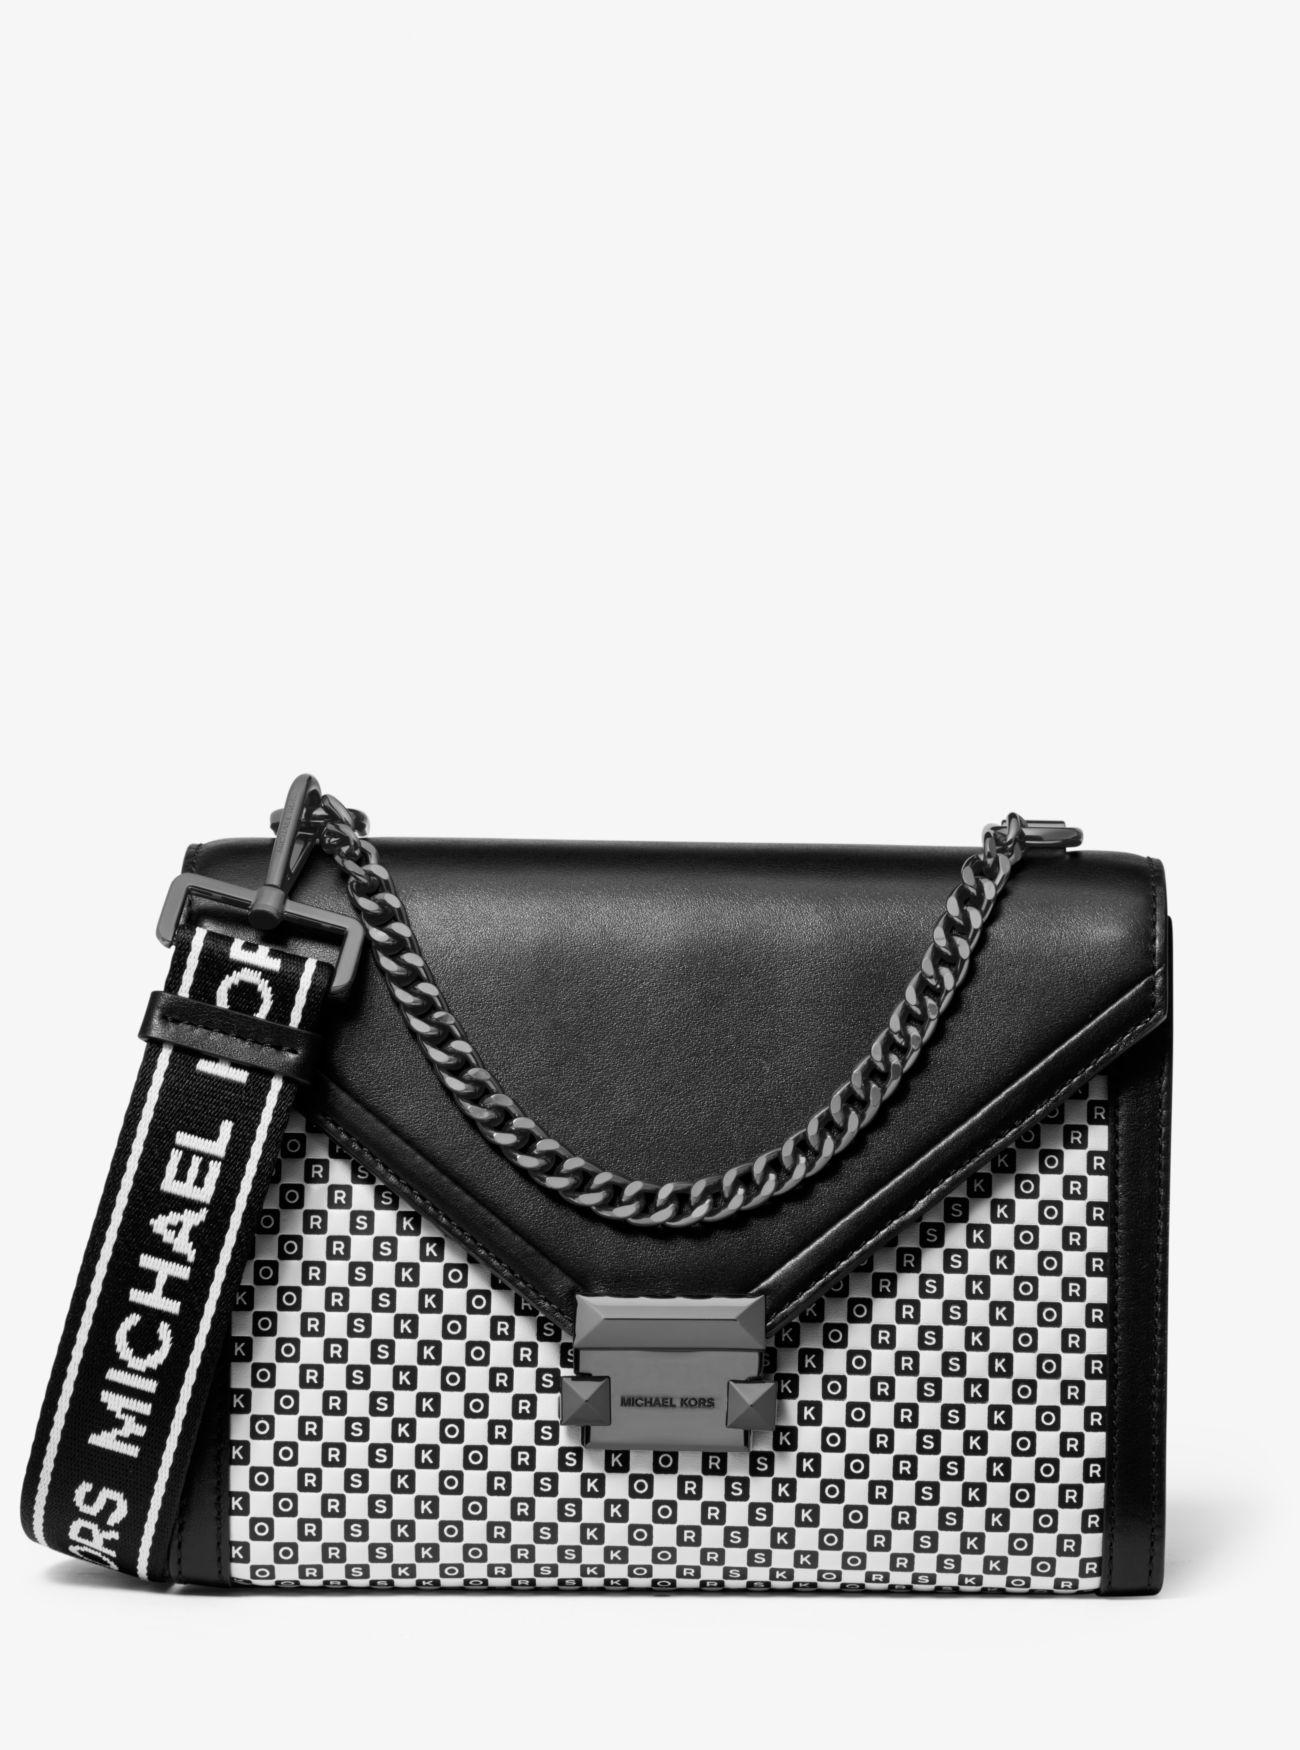 black and white michael kors handbag